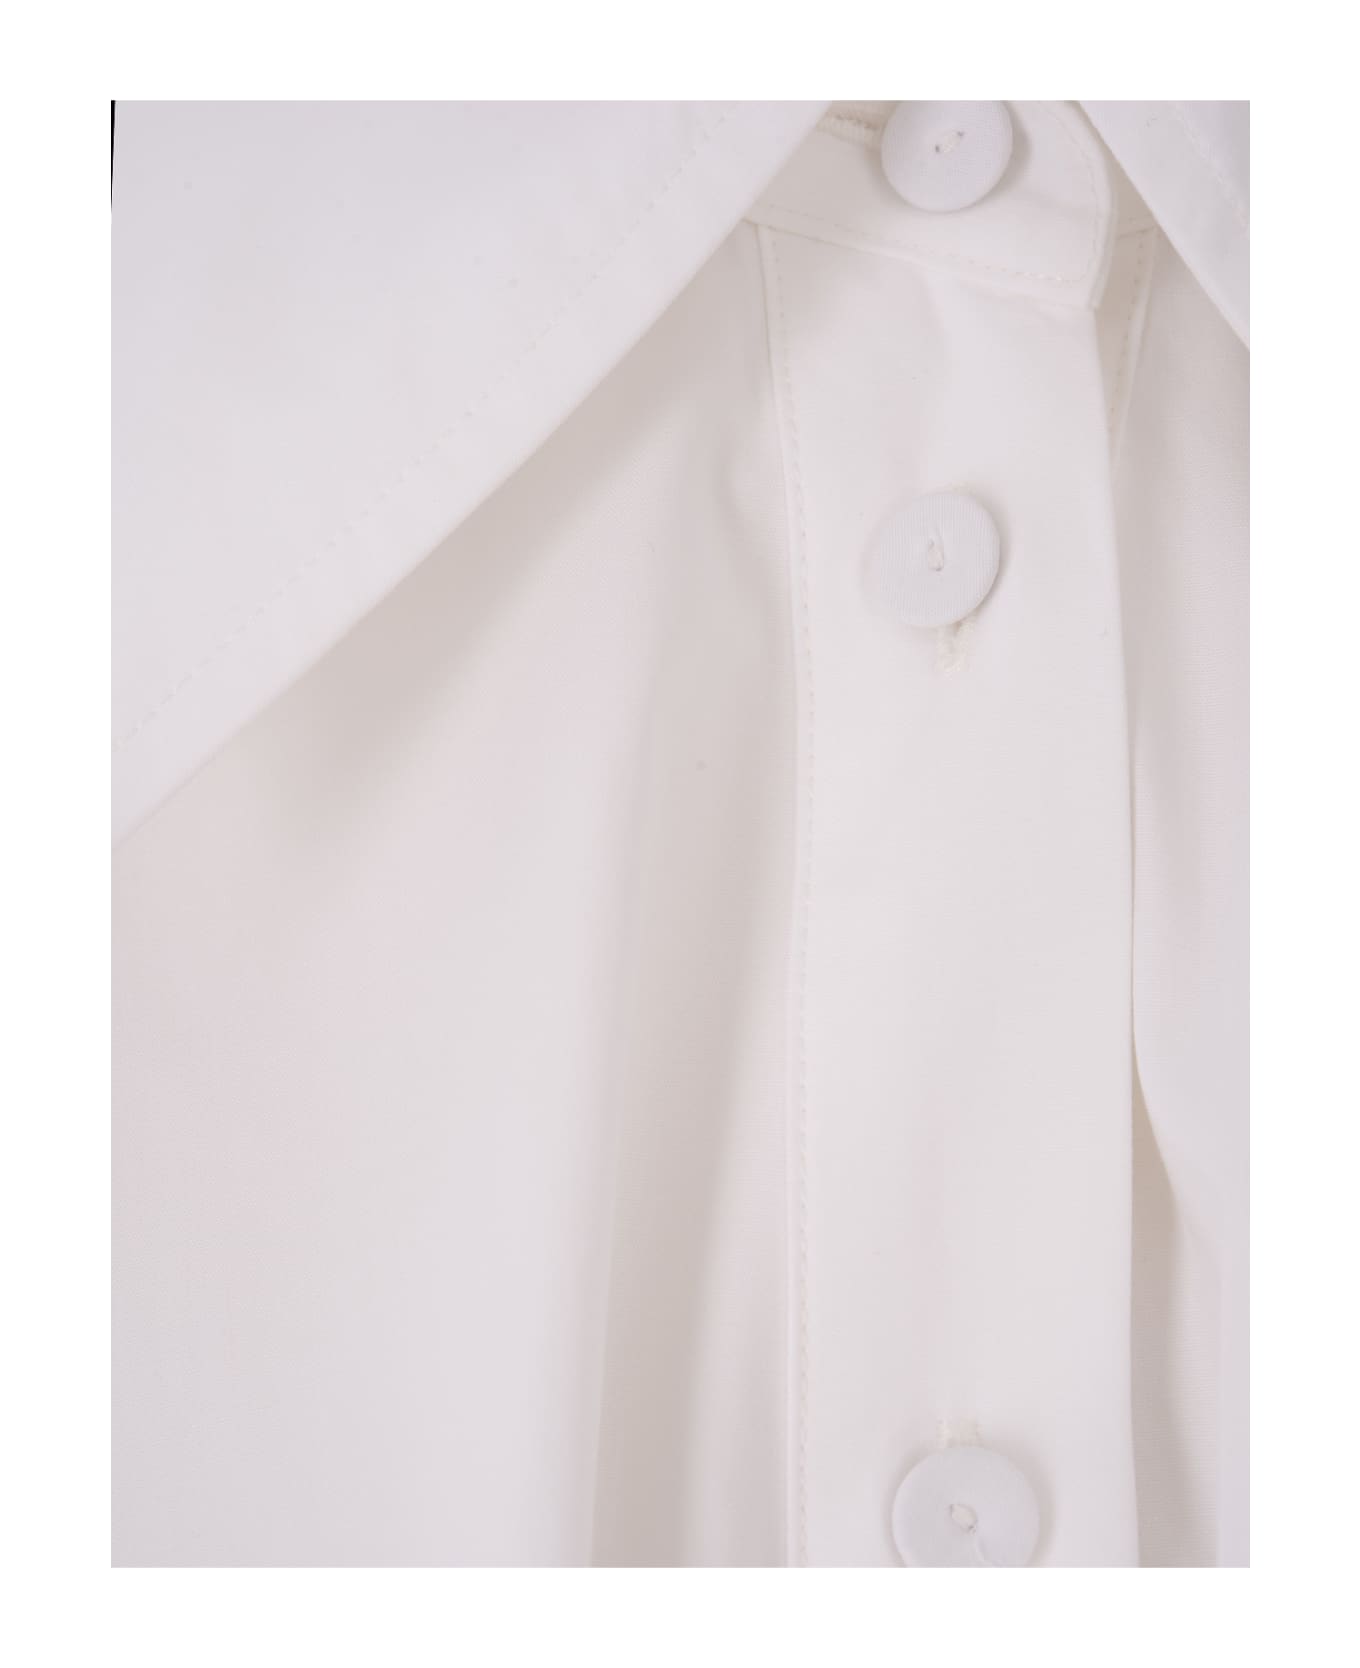 Jil Sander White Cotton Voluminous Shirt - White